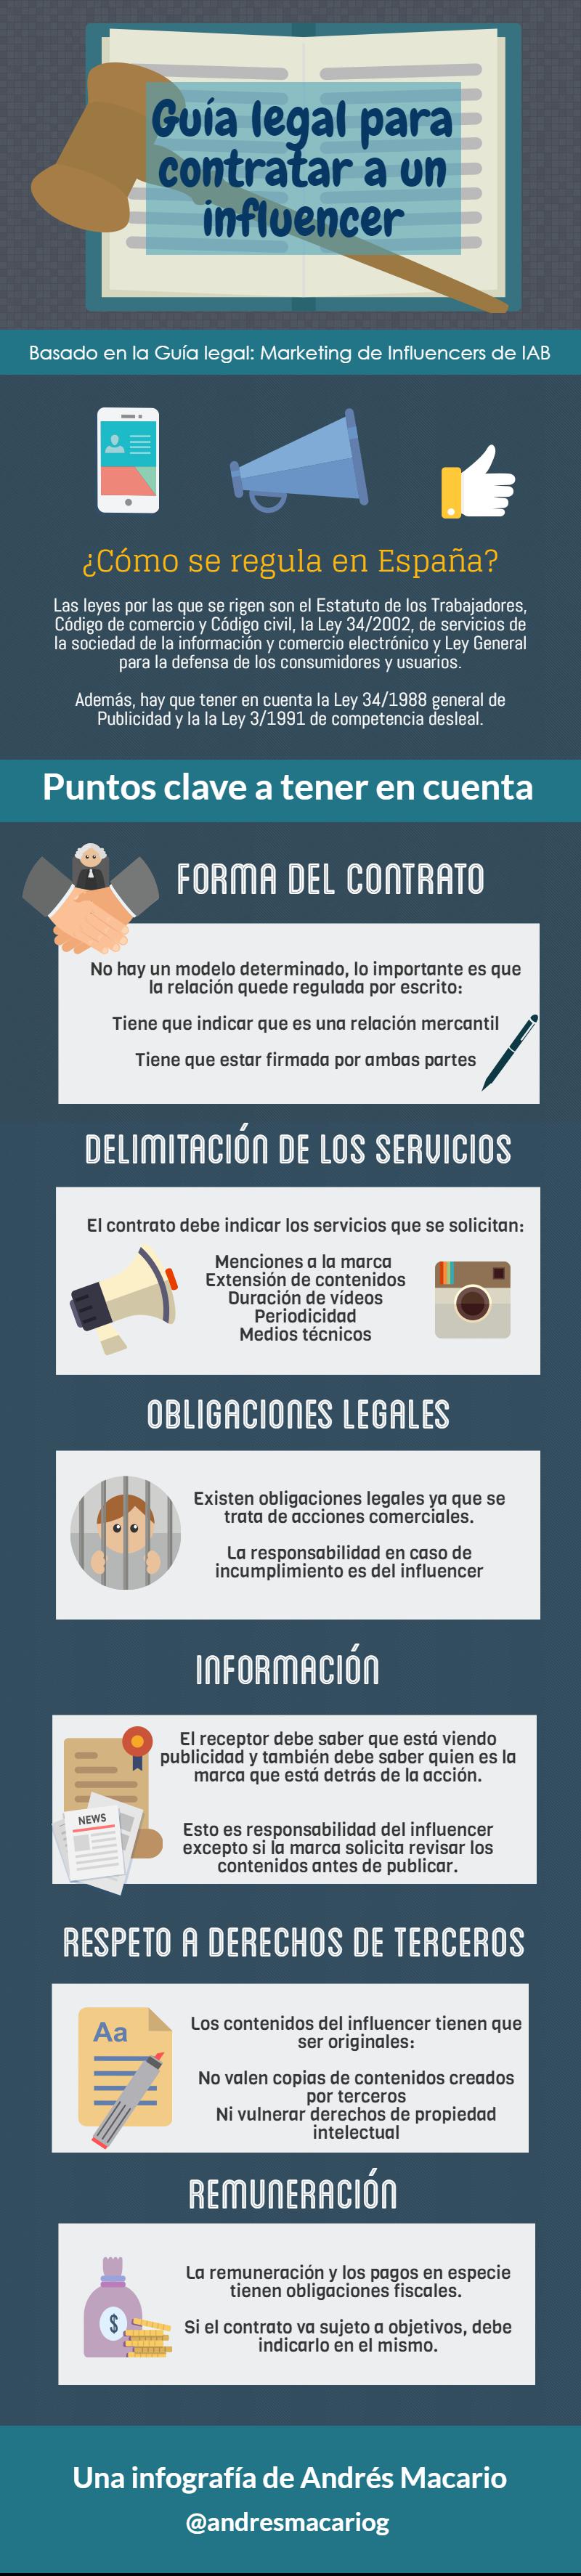 Guia legal para contratar a un influencer- Infografia Andres Macario